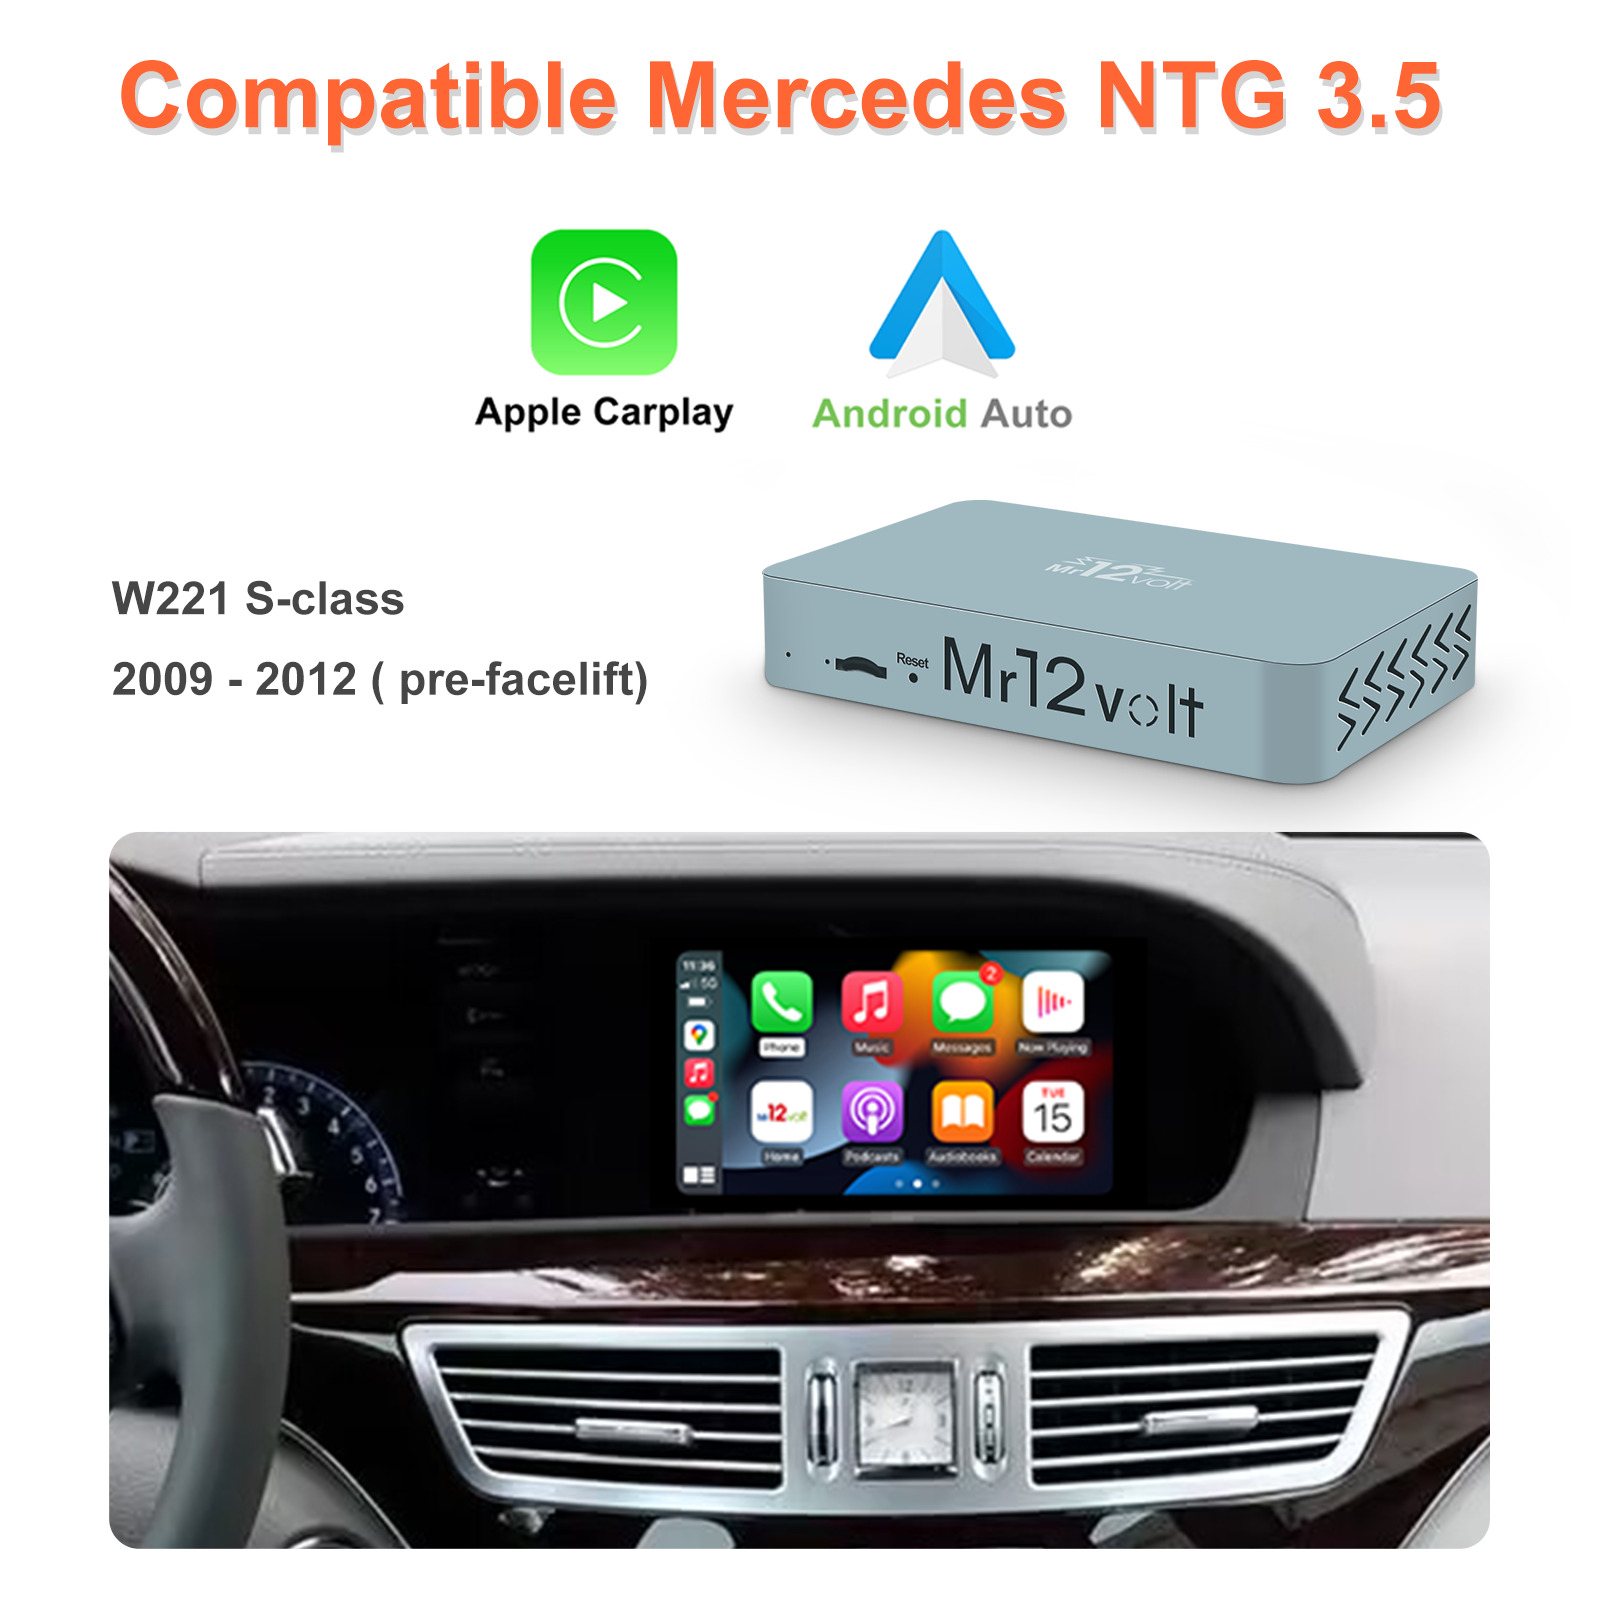 Mr12Volt Carplay Interface fits Mercedes Benz W221 NTG3.5 supports OEM Mic